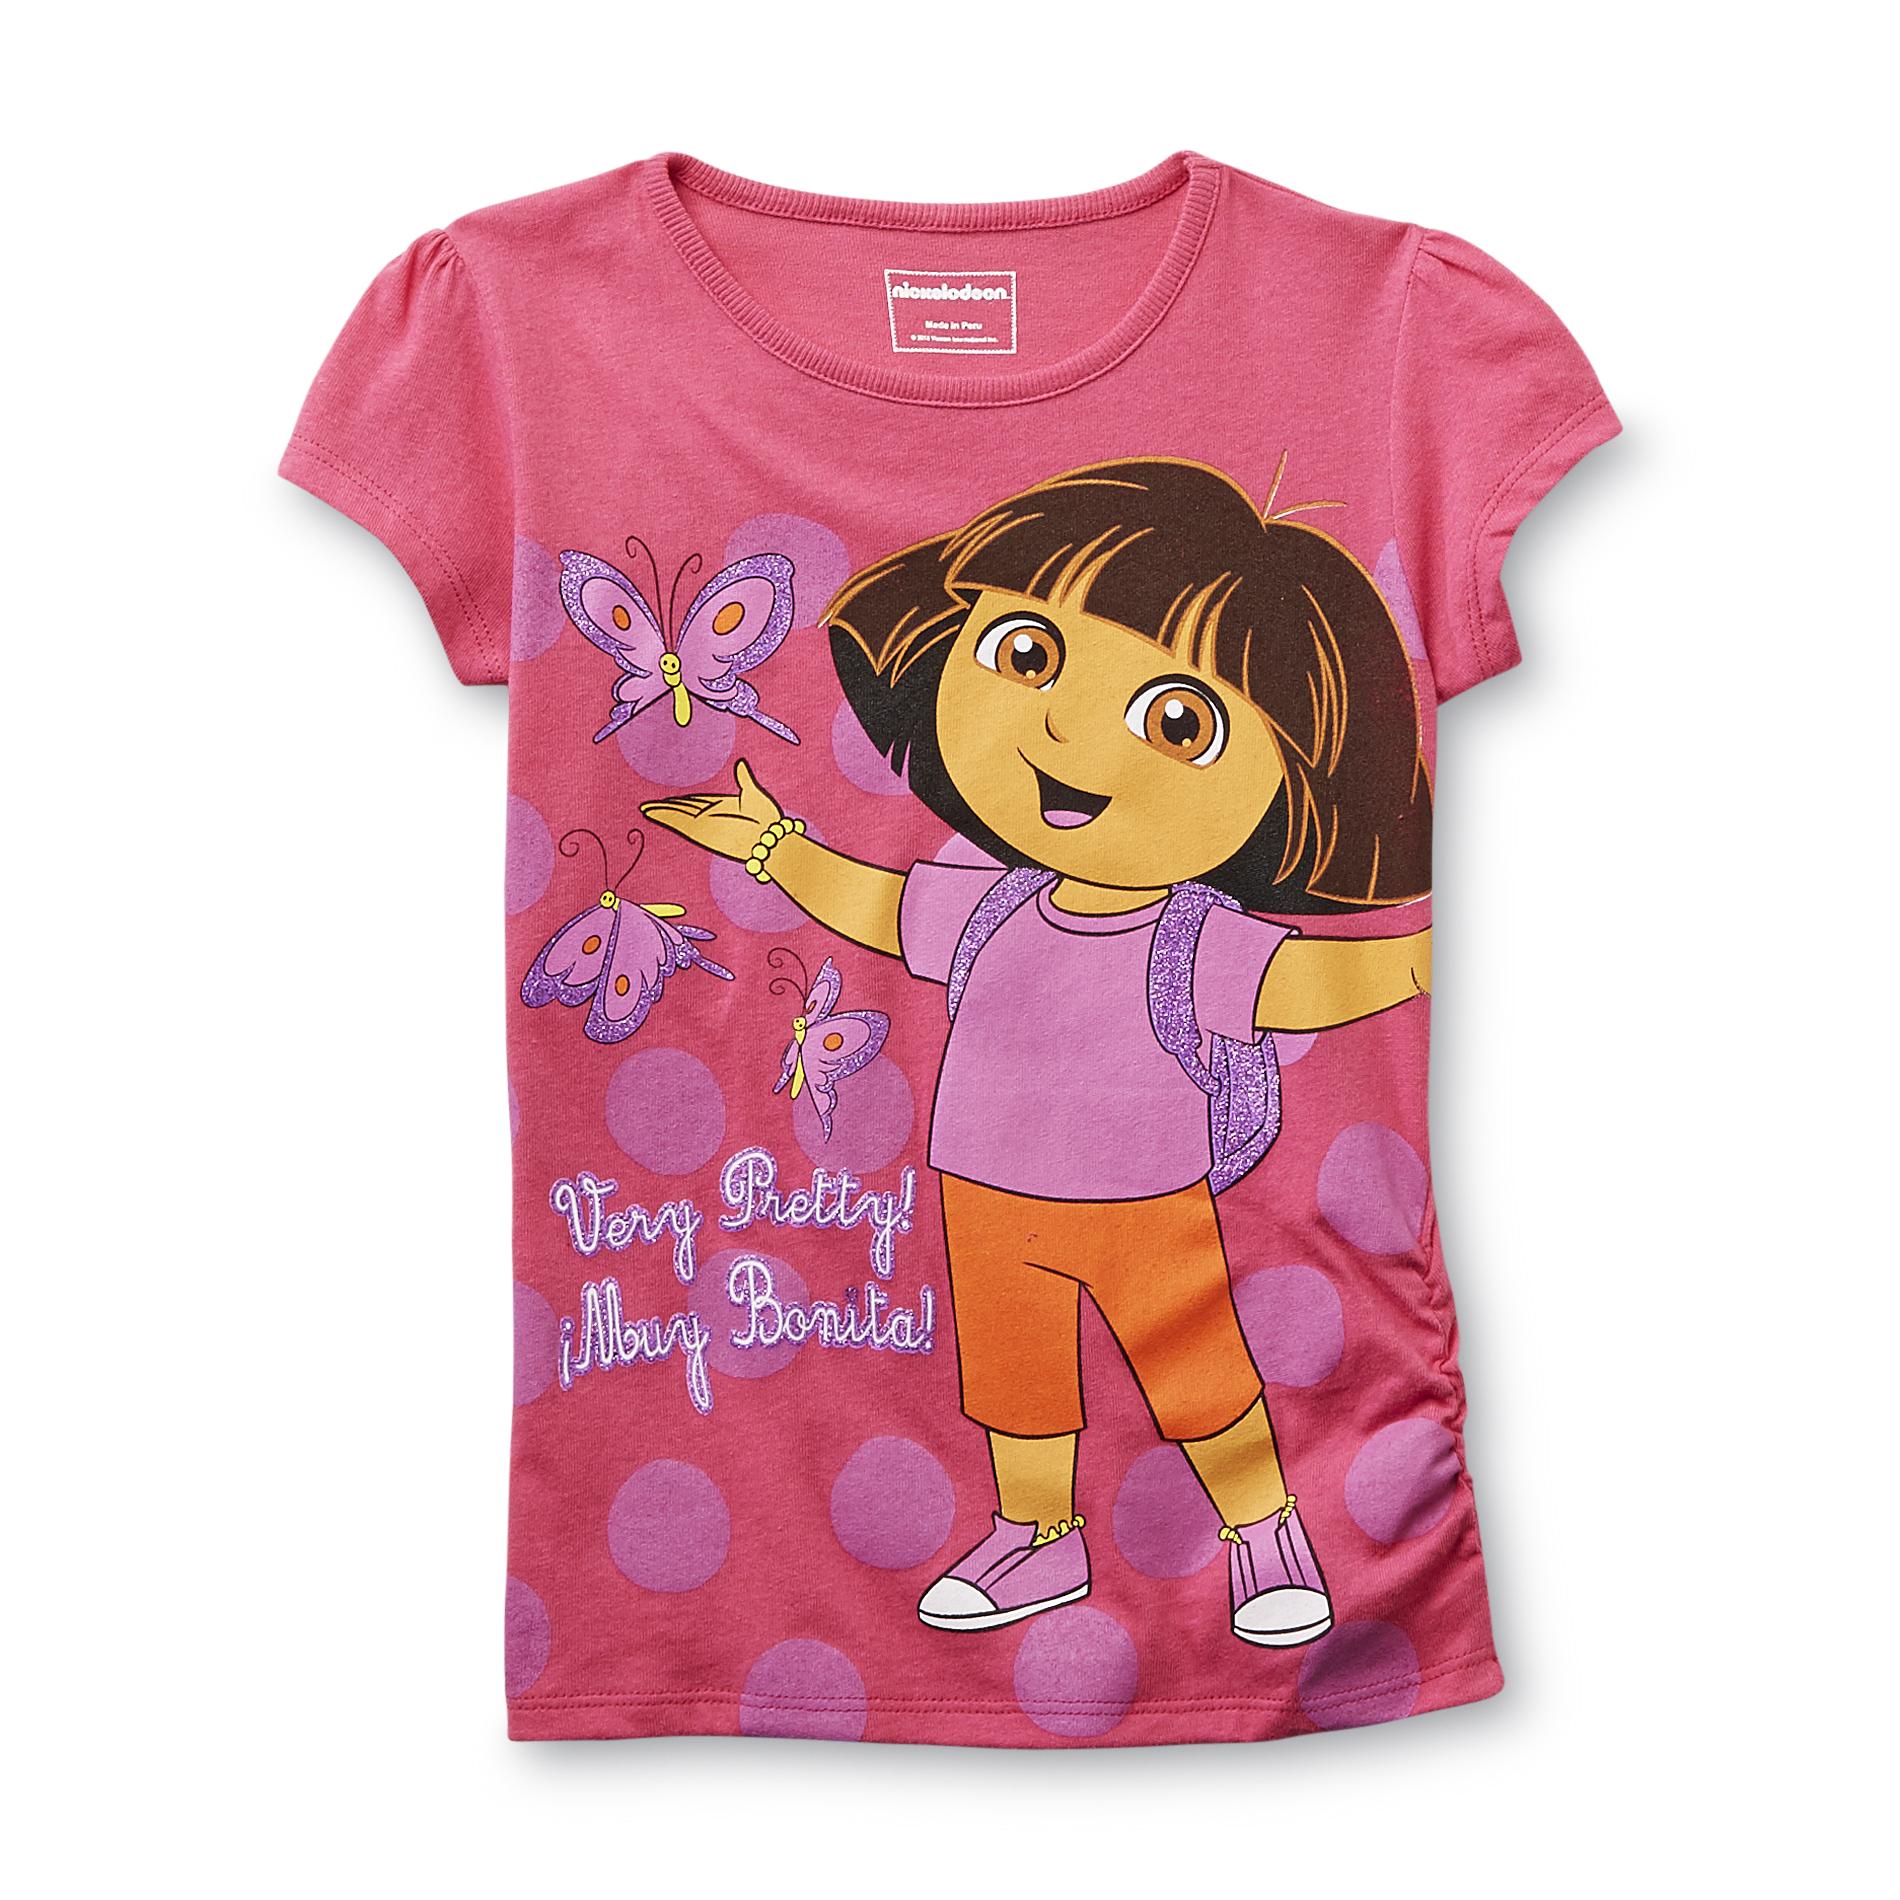 Nickelodeon Dora the Explorer Girl's Glitter T-Shirt